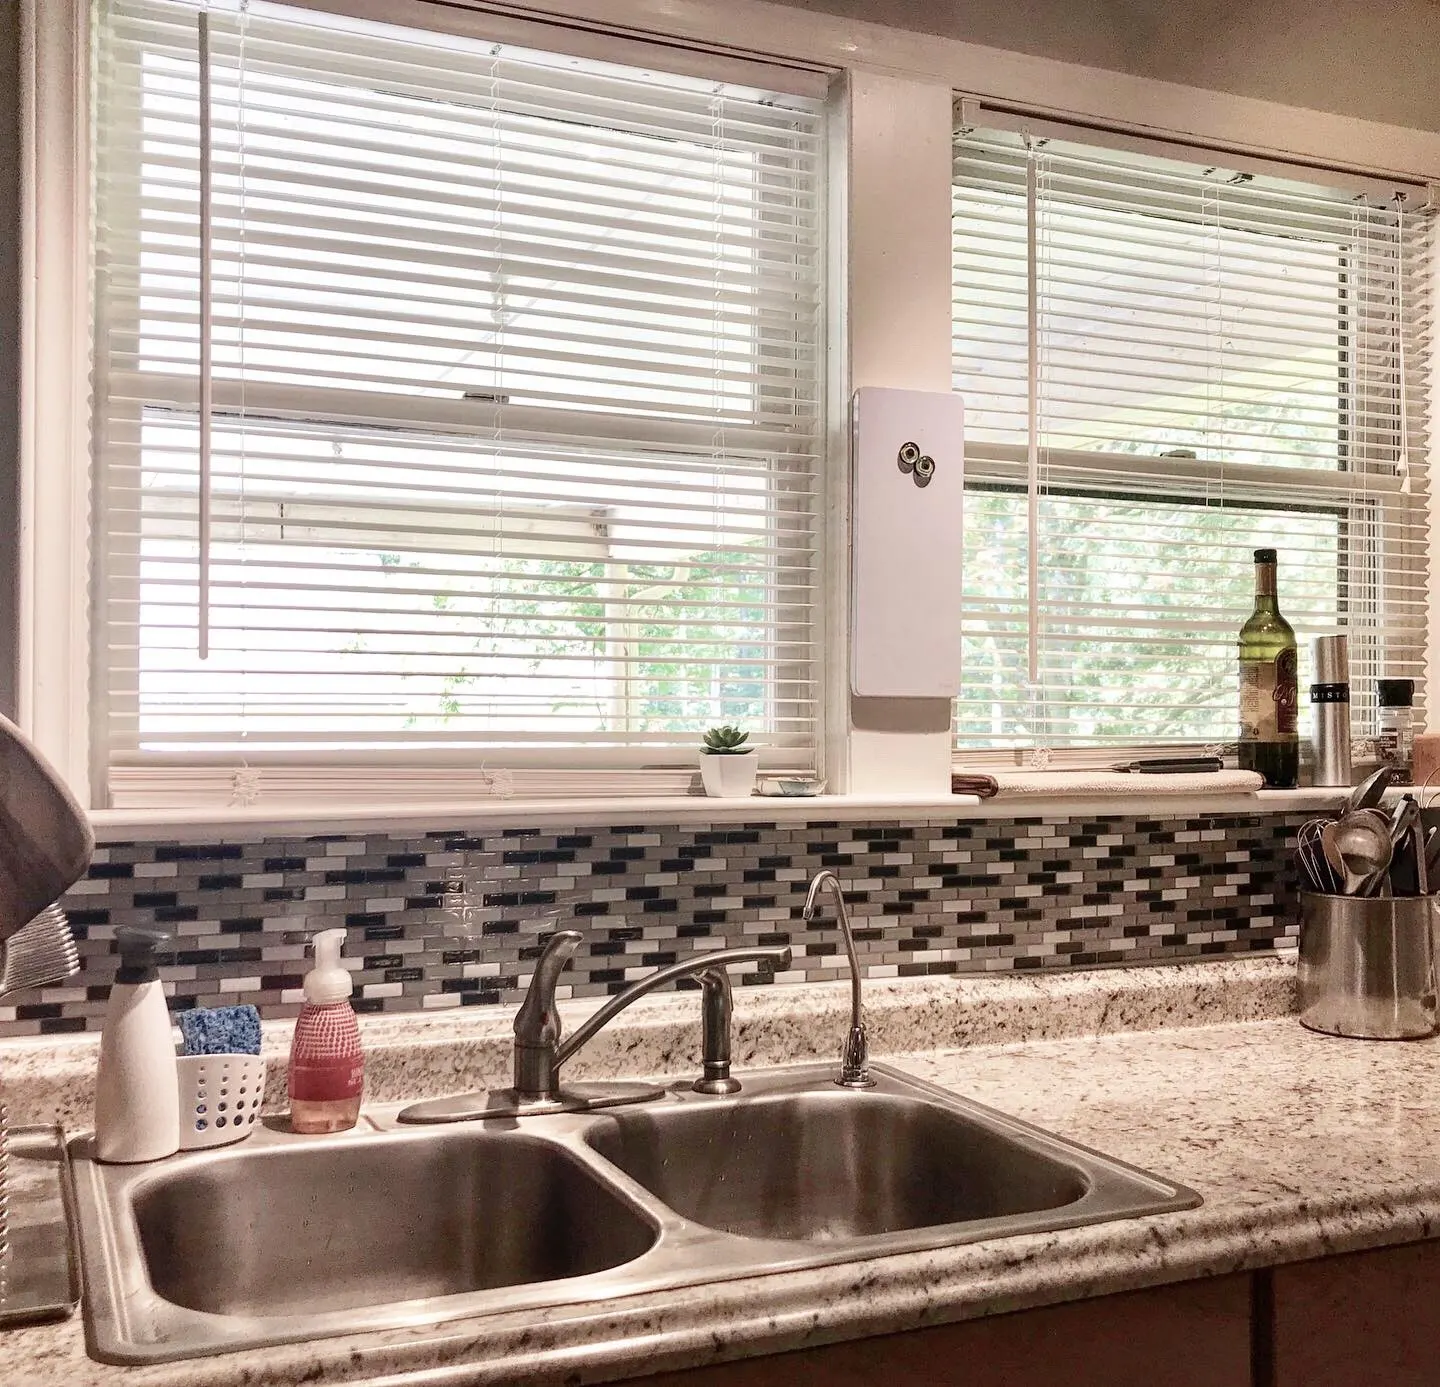 kitchen sink area with new back splash - peel and stick backsplash review